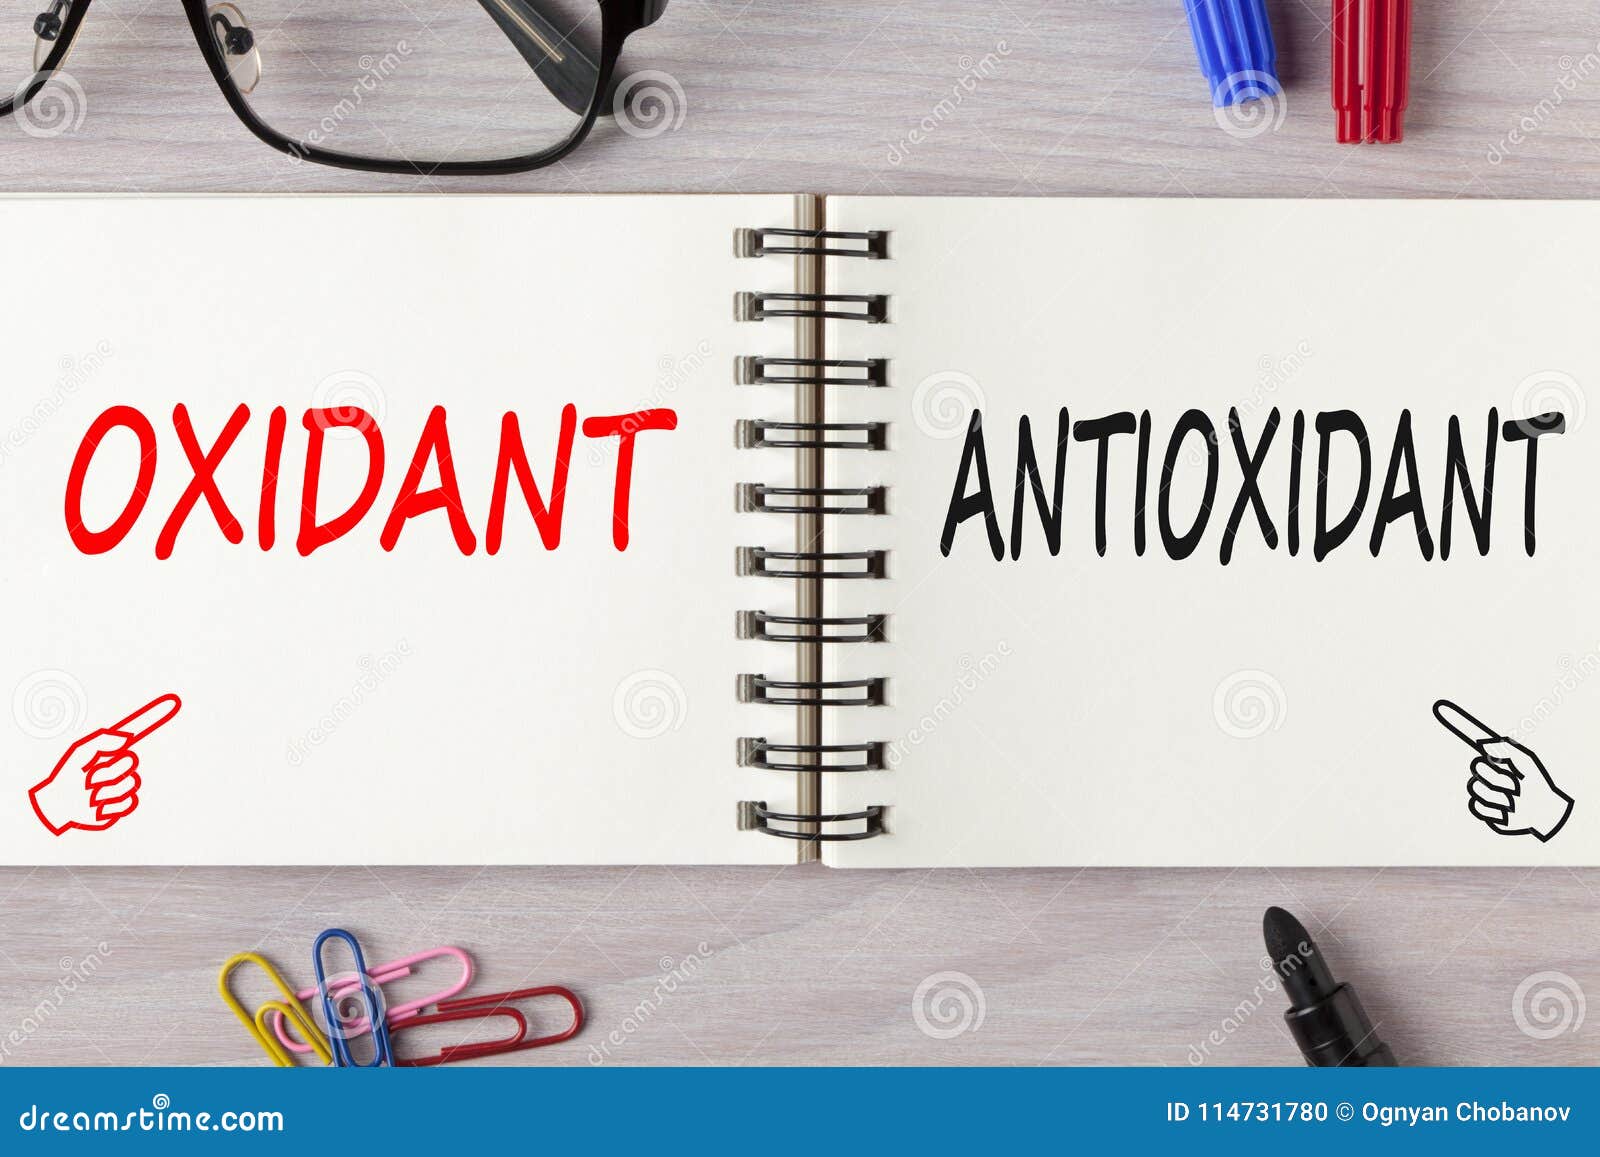 antioxidant or oxidant written on notebook concept